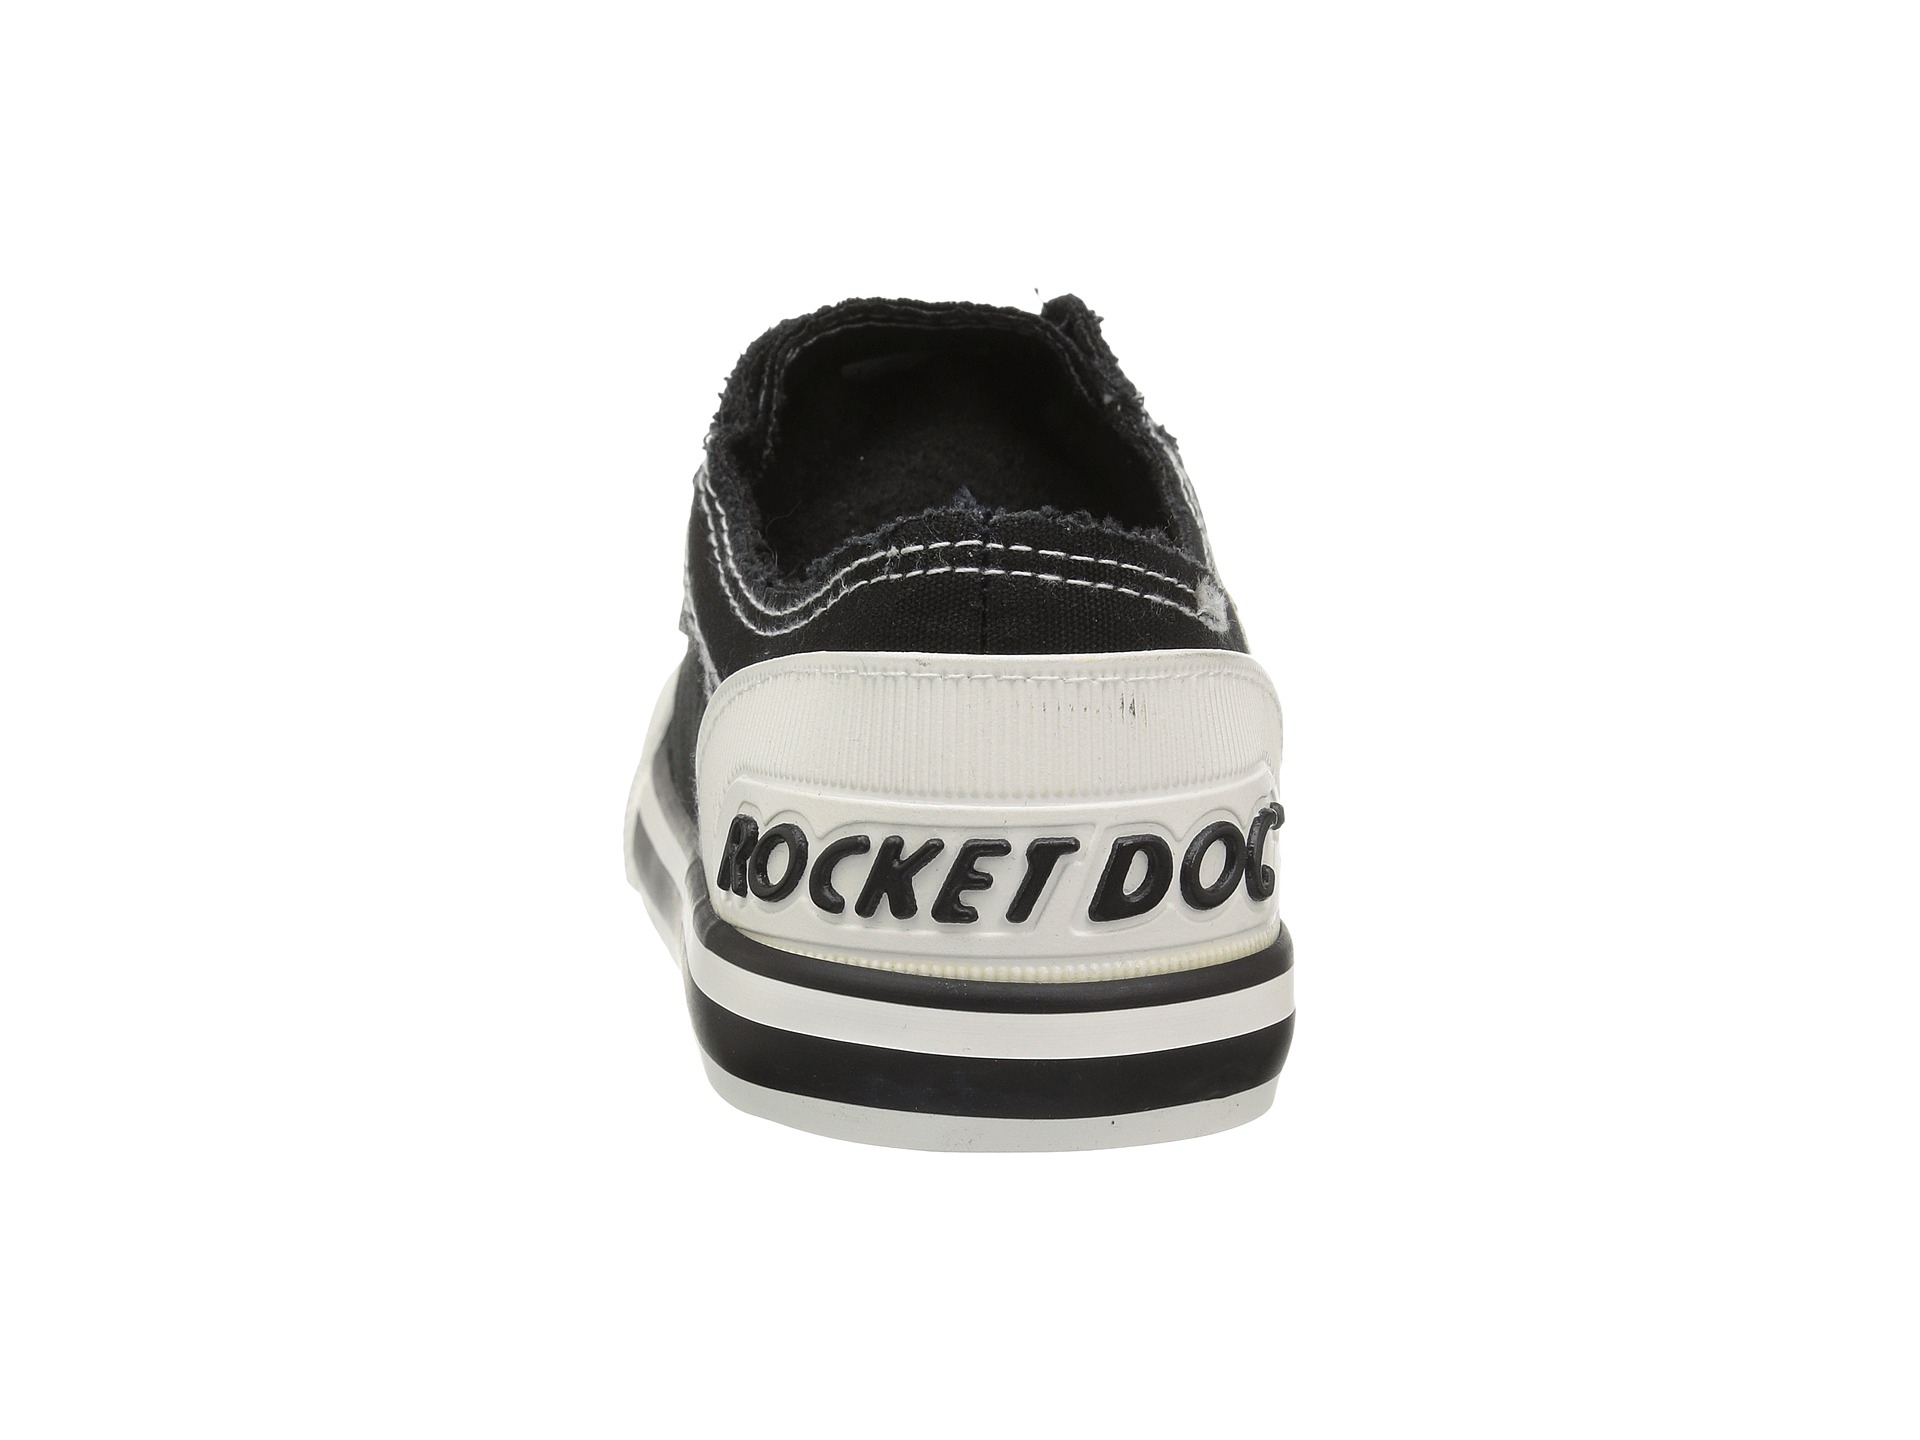 Rocket Dog Jazzin at Zappos.com